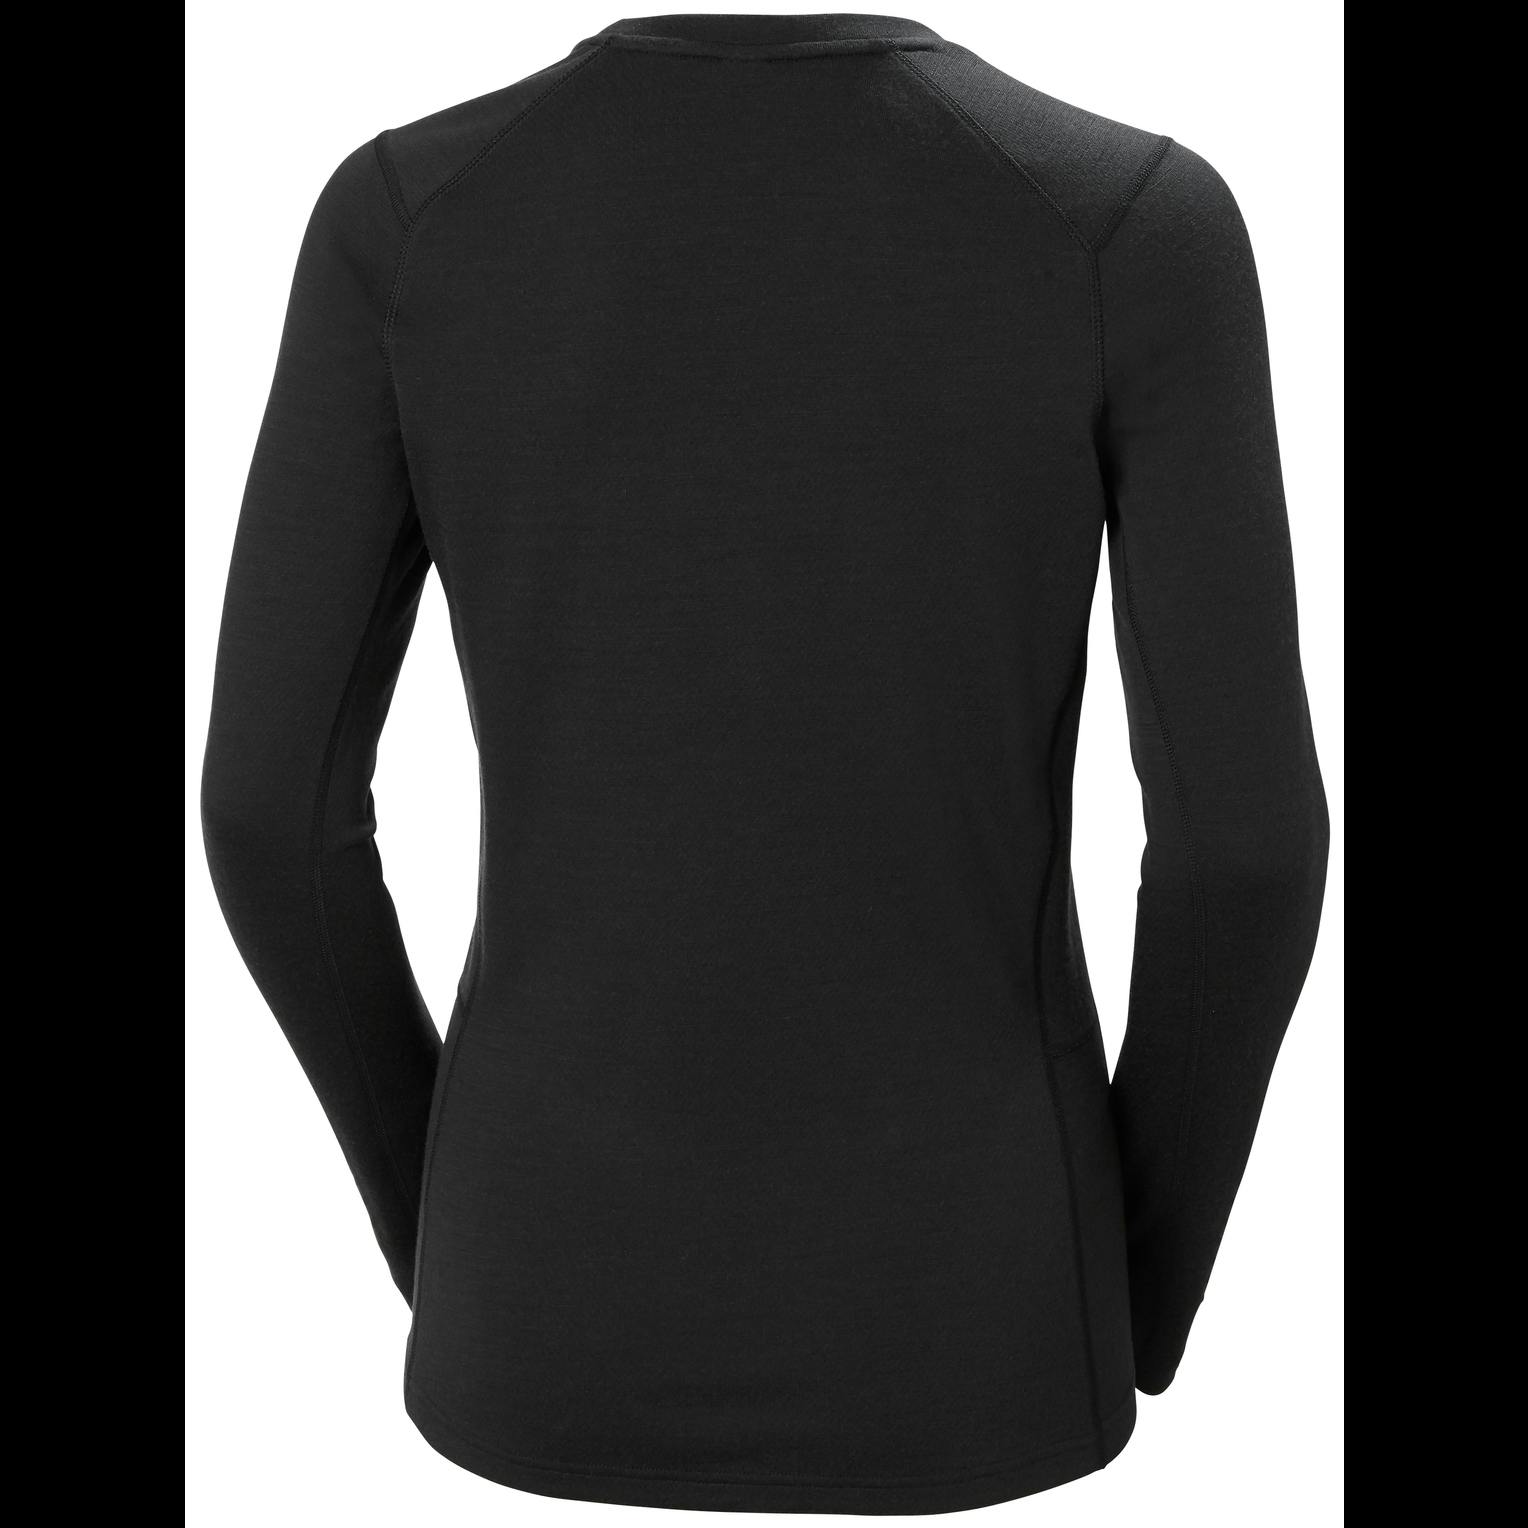 Ladies/Women's CAMPRI Thermal Base Layer Top/ Short Sleeve Tee GREY S-XXL NEW 